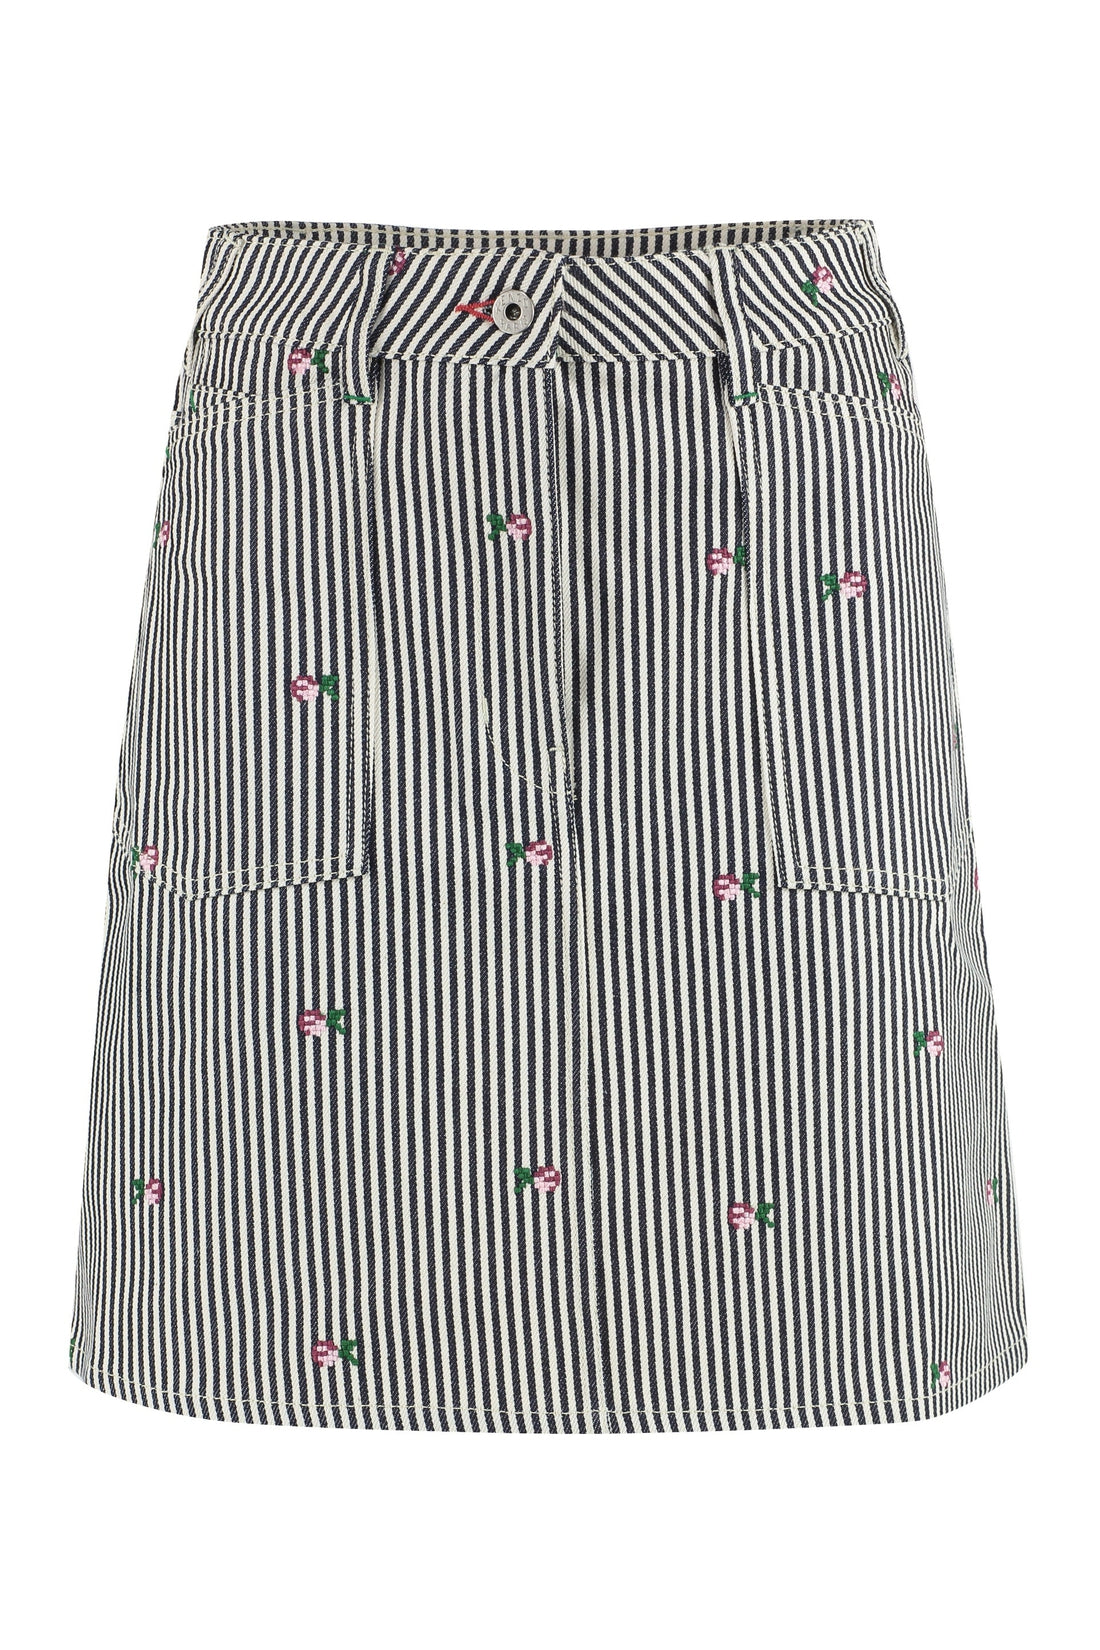 Kenzo-OUTLET-SALE-Striped denim mini skirt-ARCHIVIST